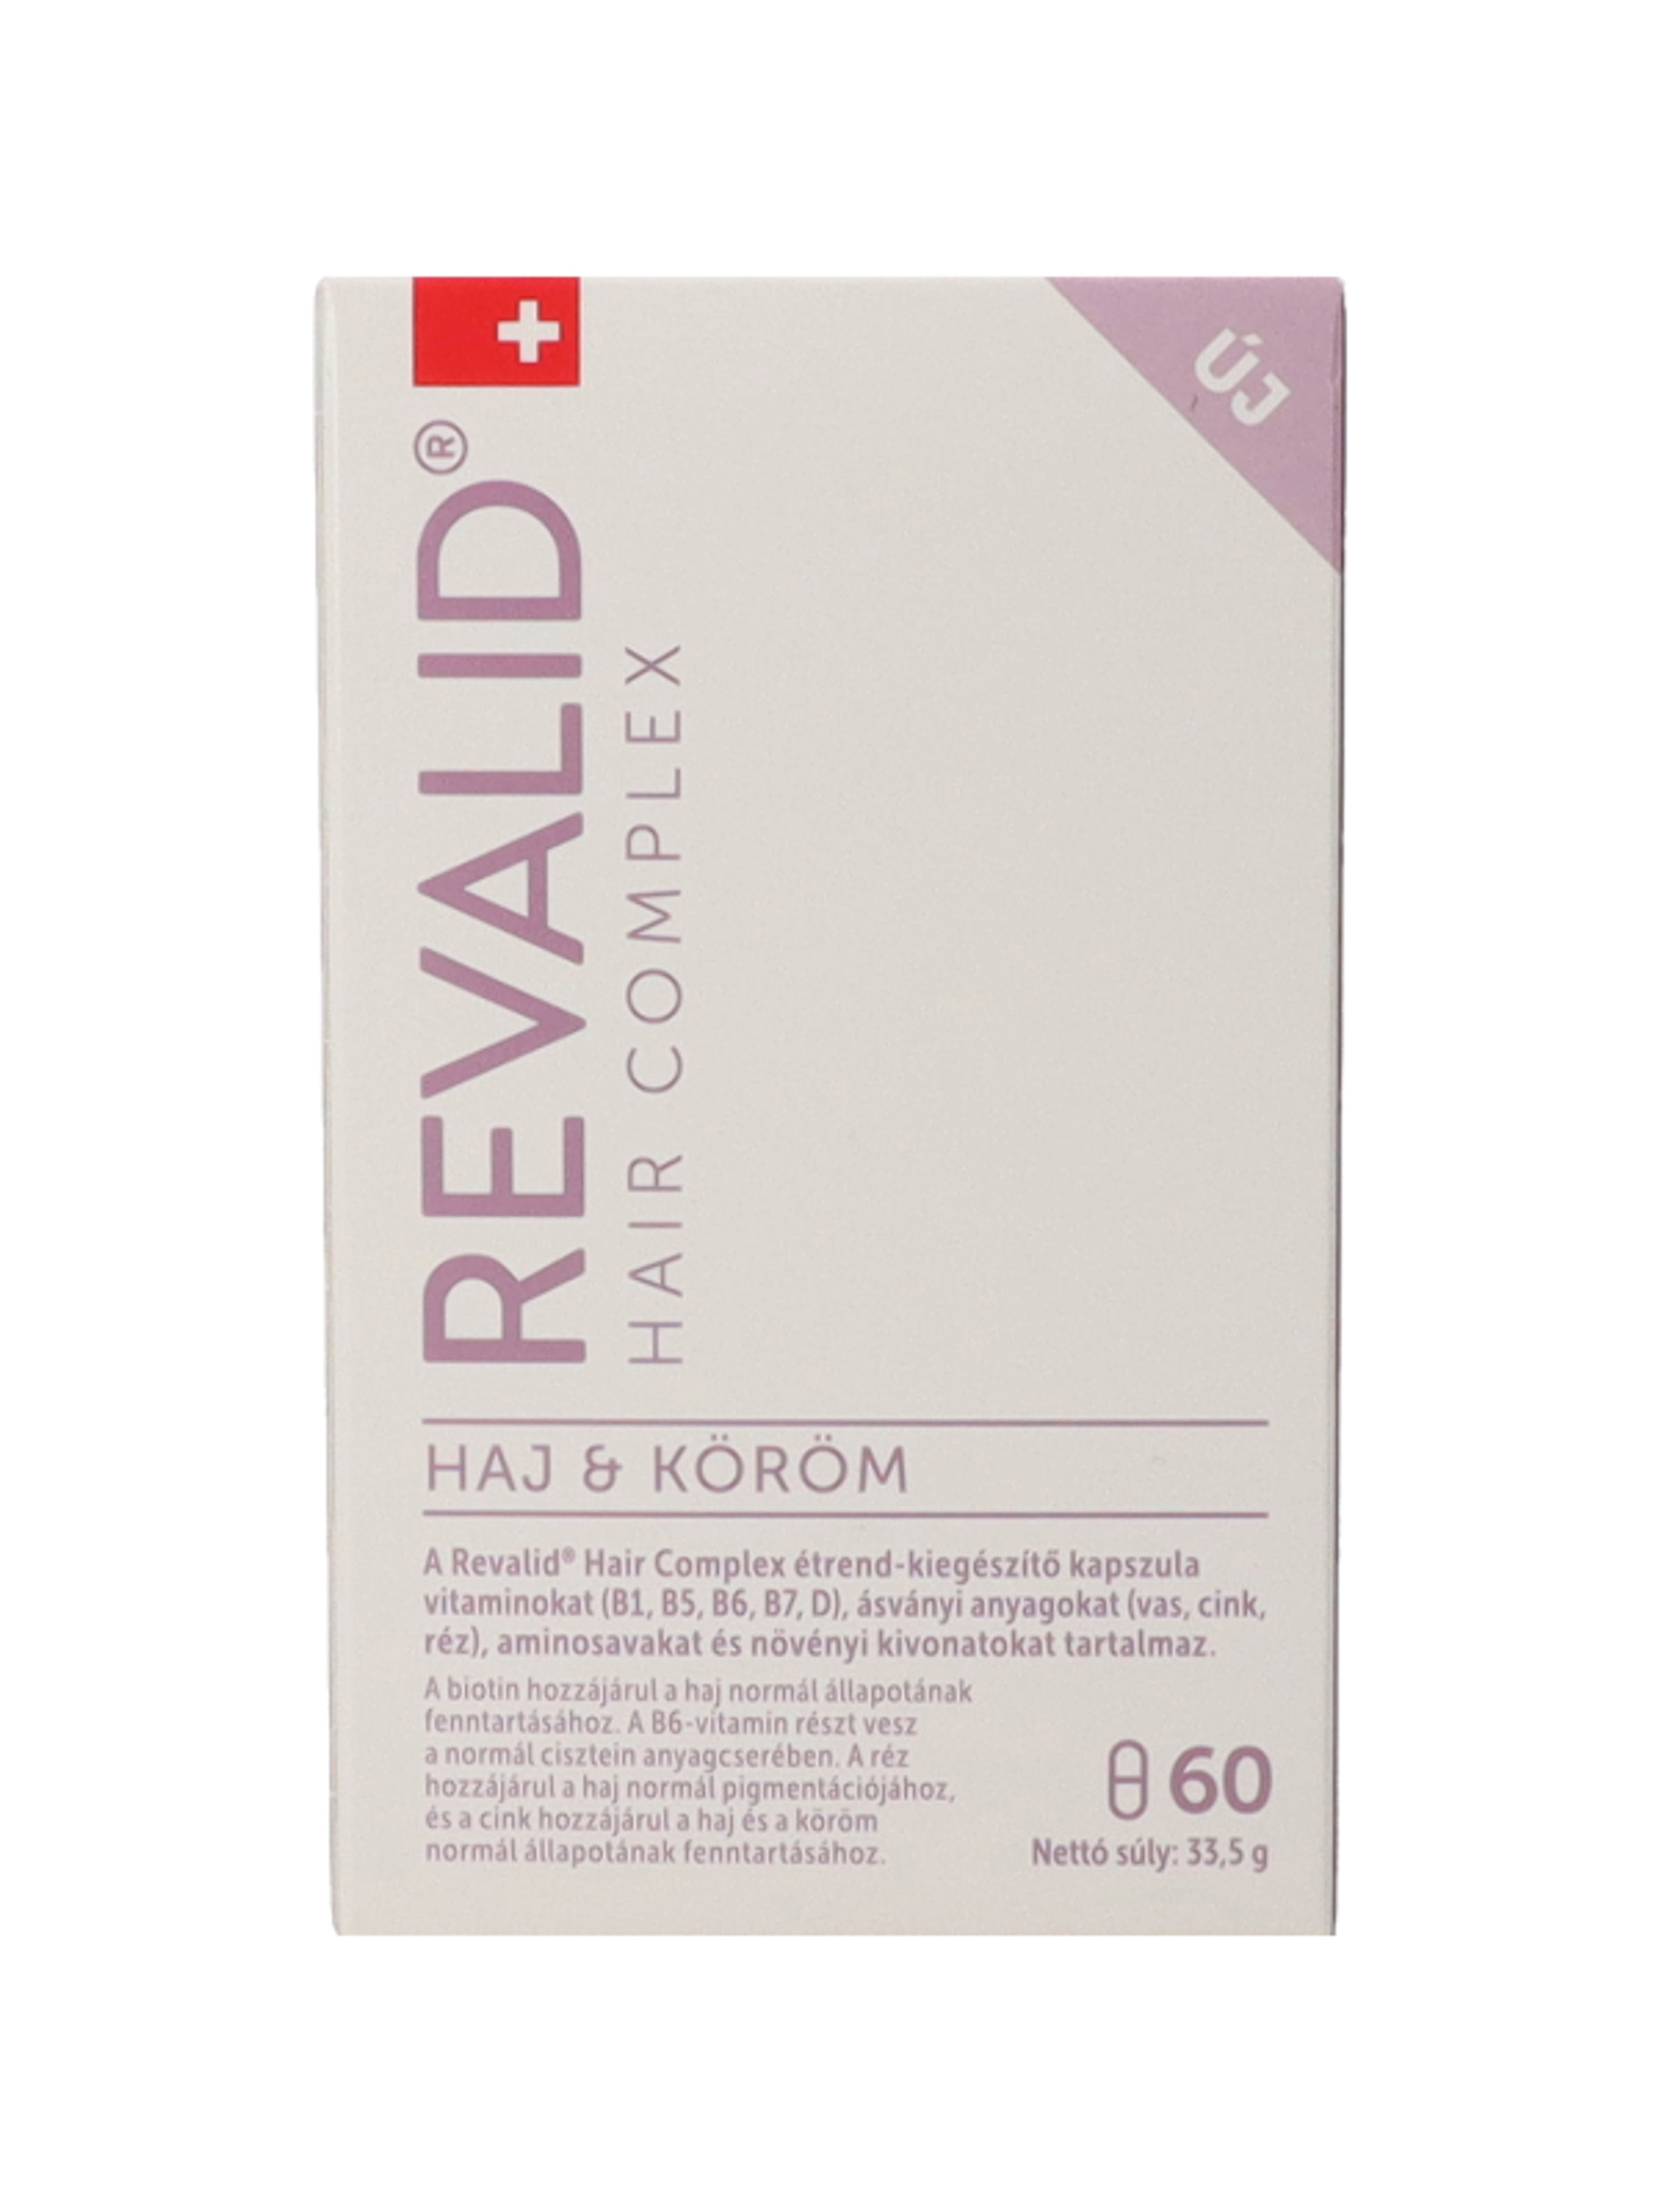 Revalid hair complex étrend-kiegészítő kapszula - 60 db